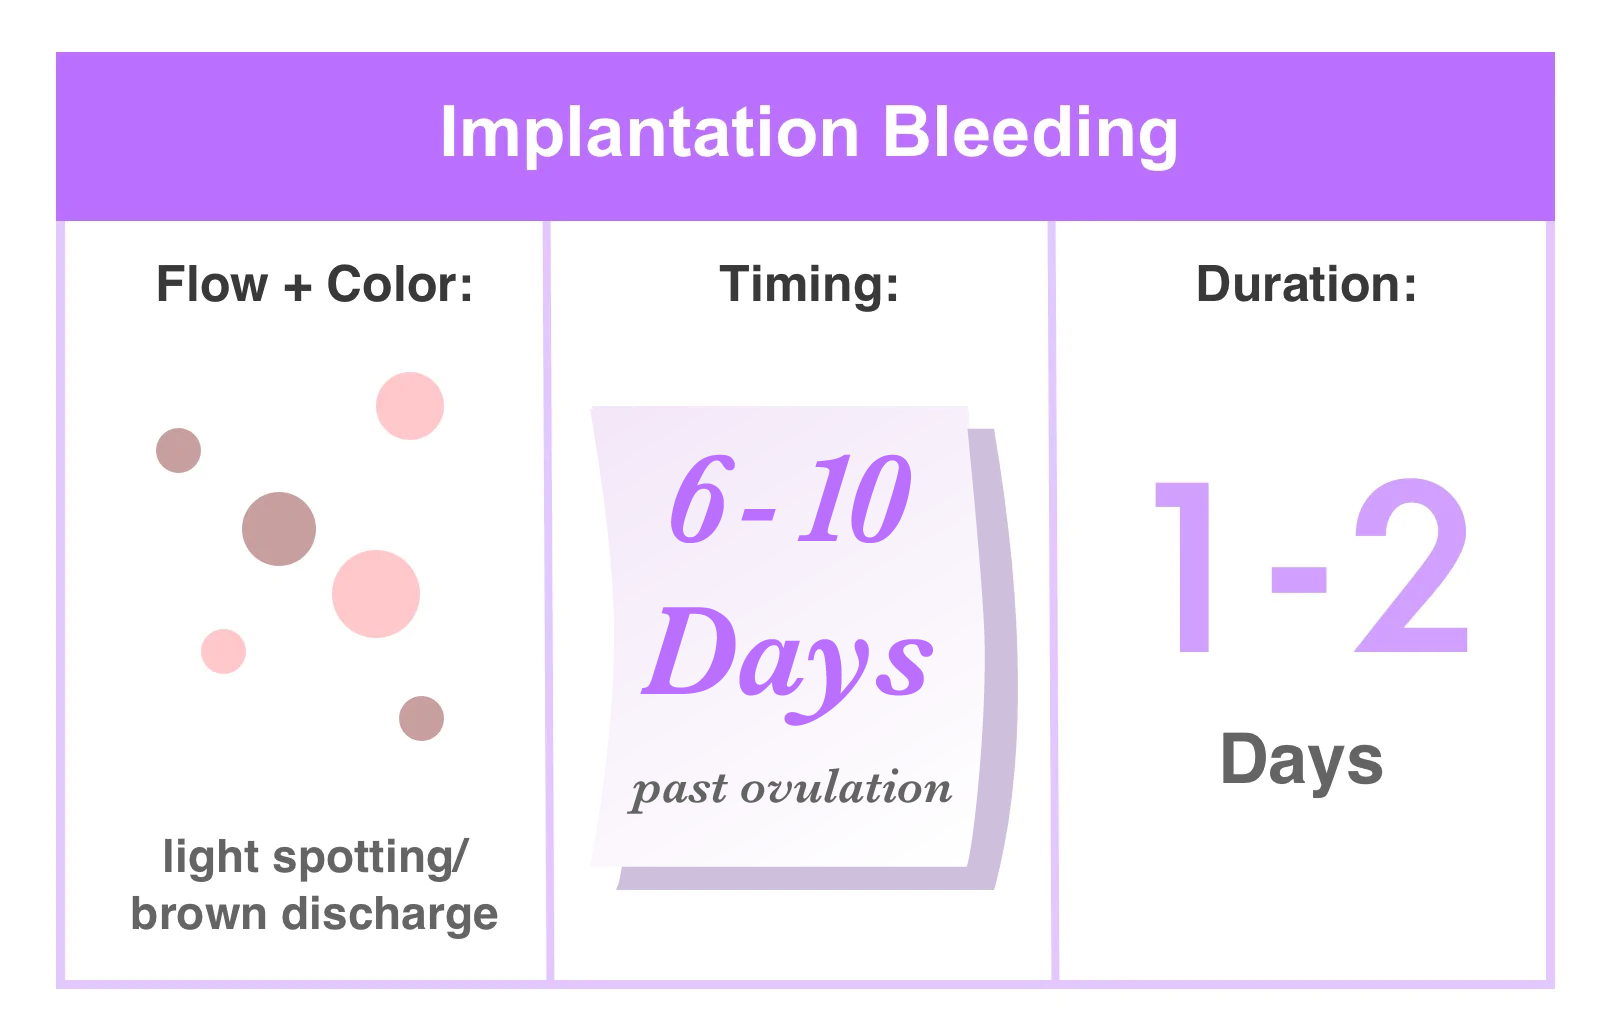 Implantation Bleeding Timing Calculator Meganeaggelos